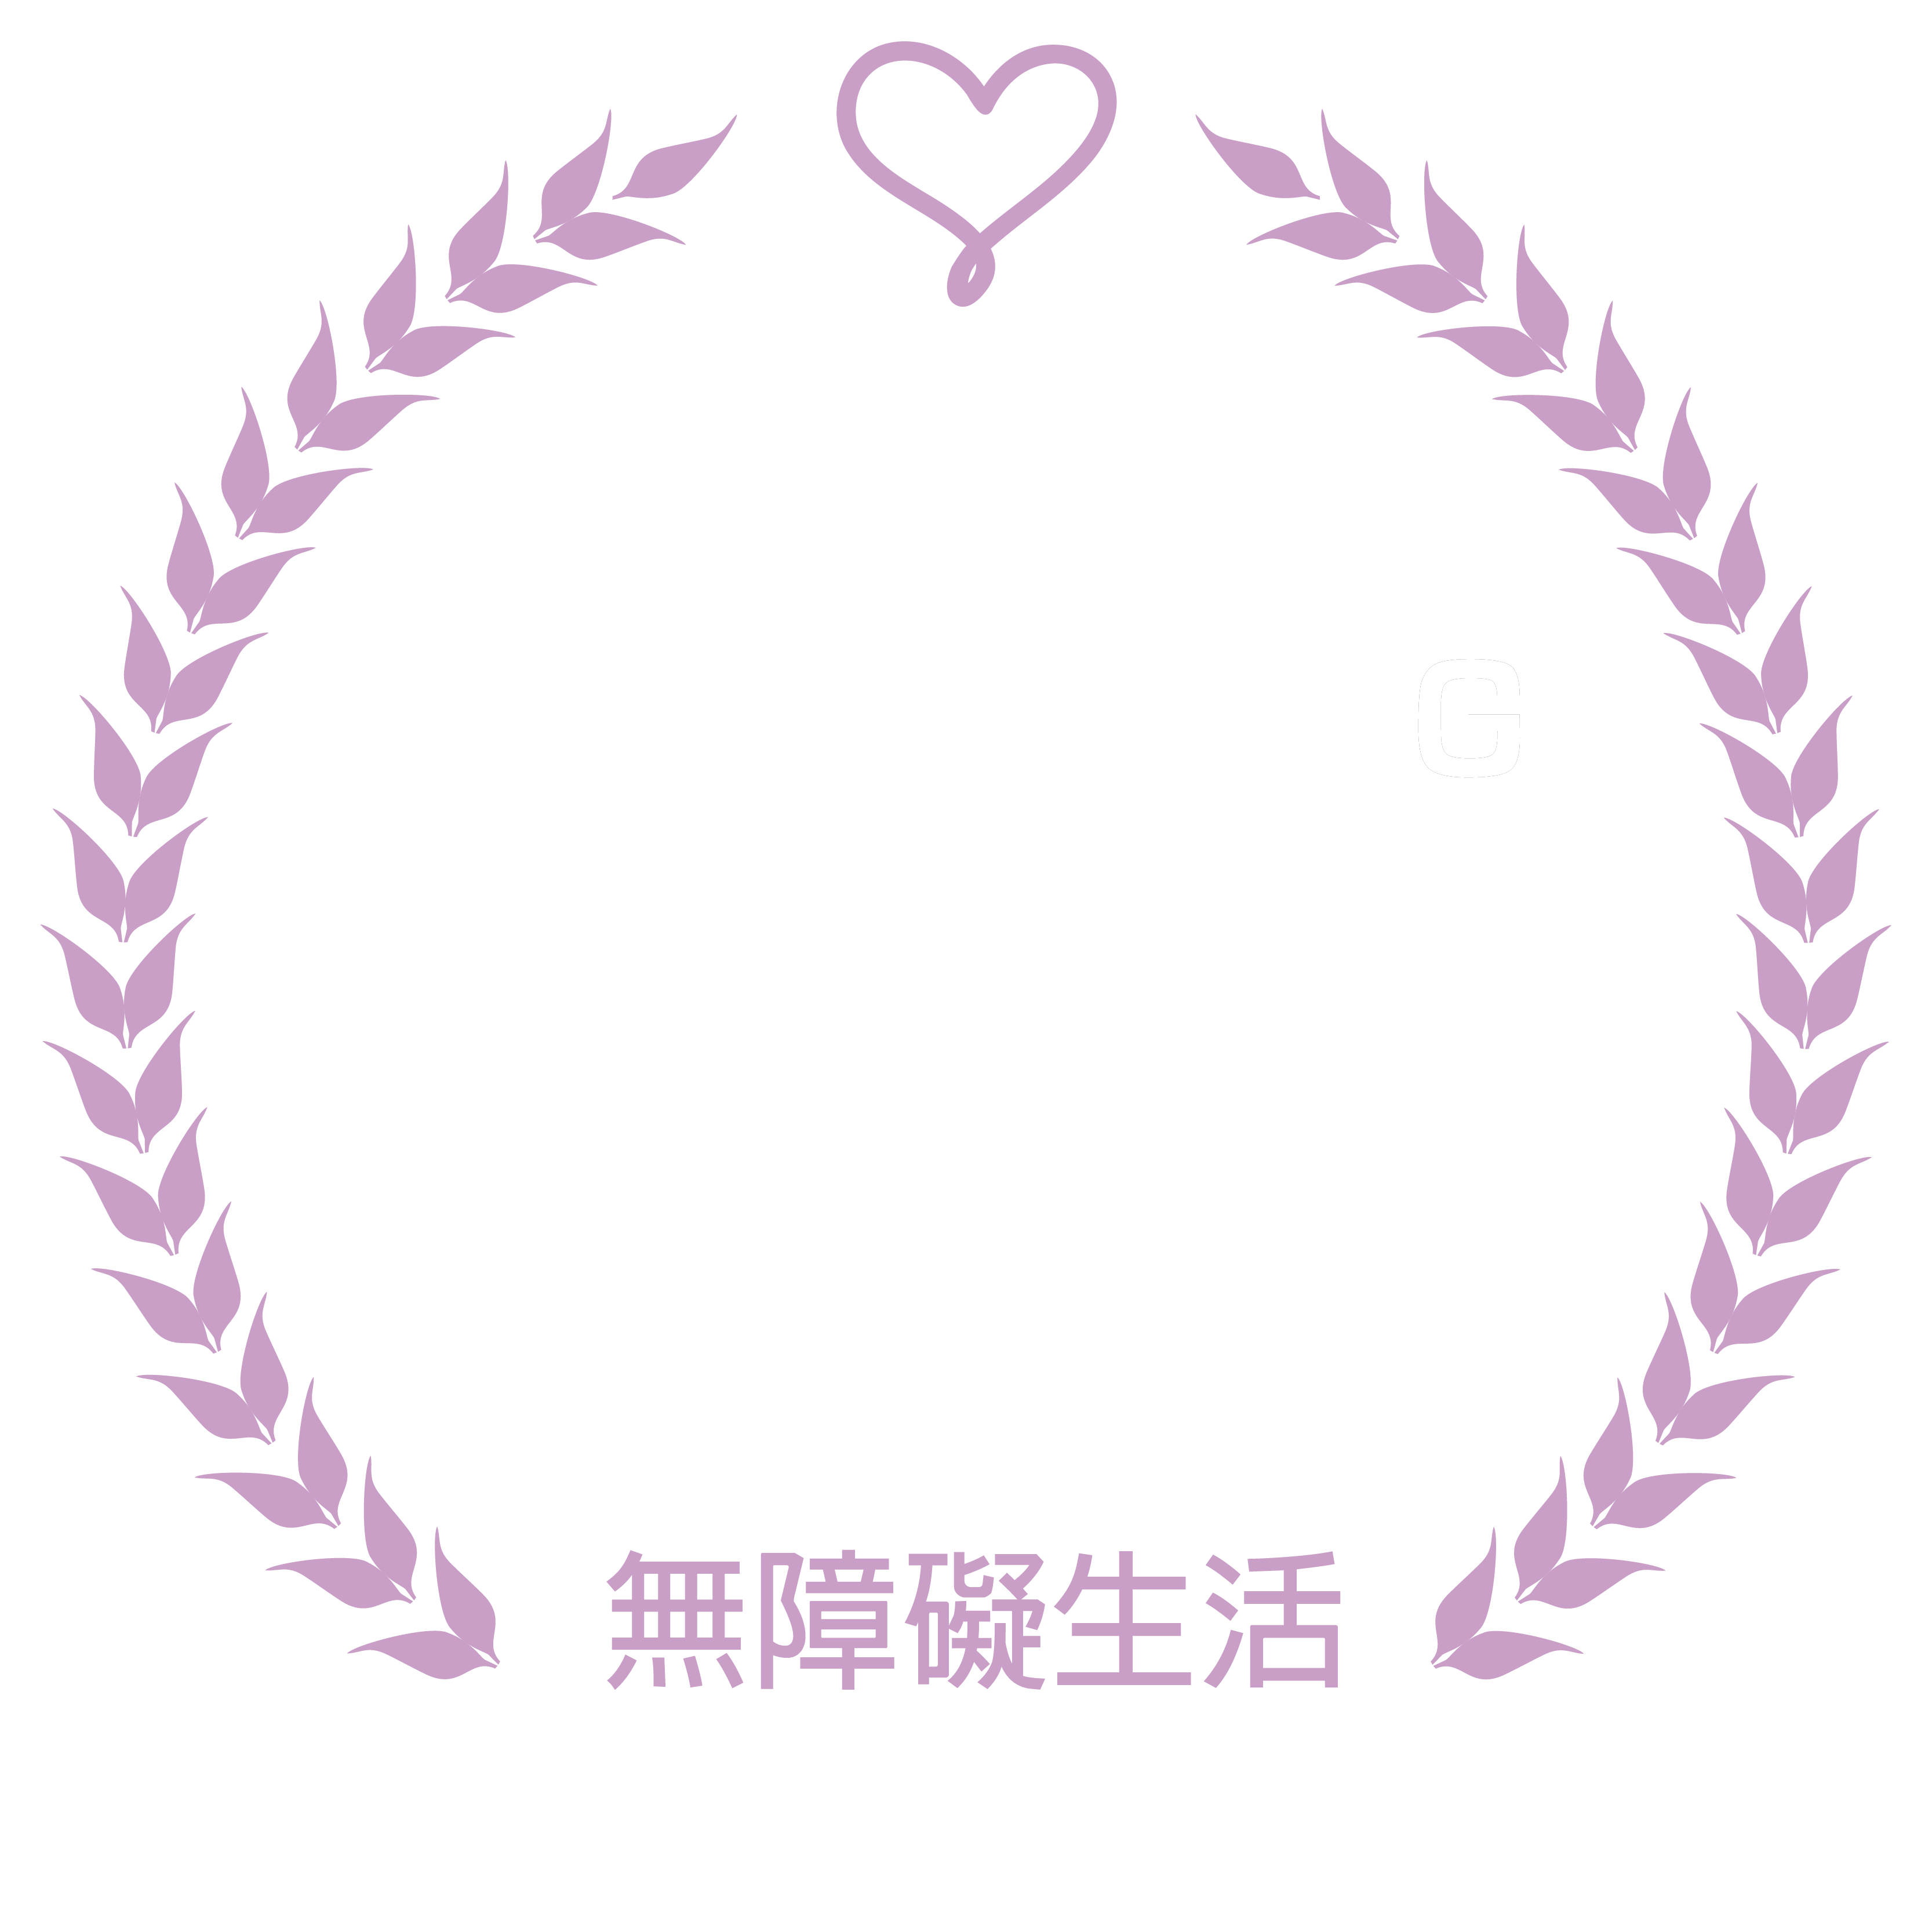 Outstanding Barrier-free Organization Organization Tour Badge